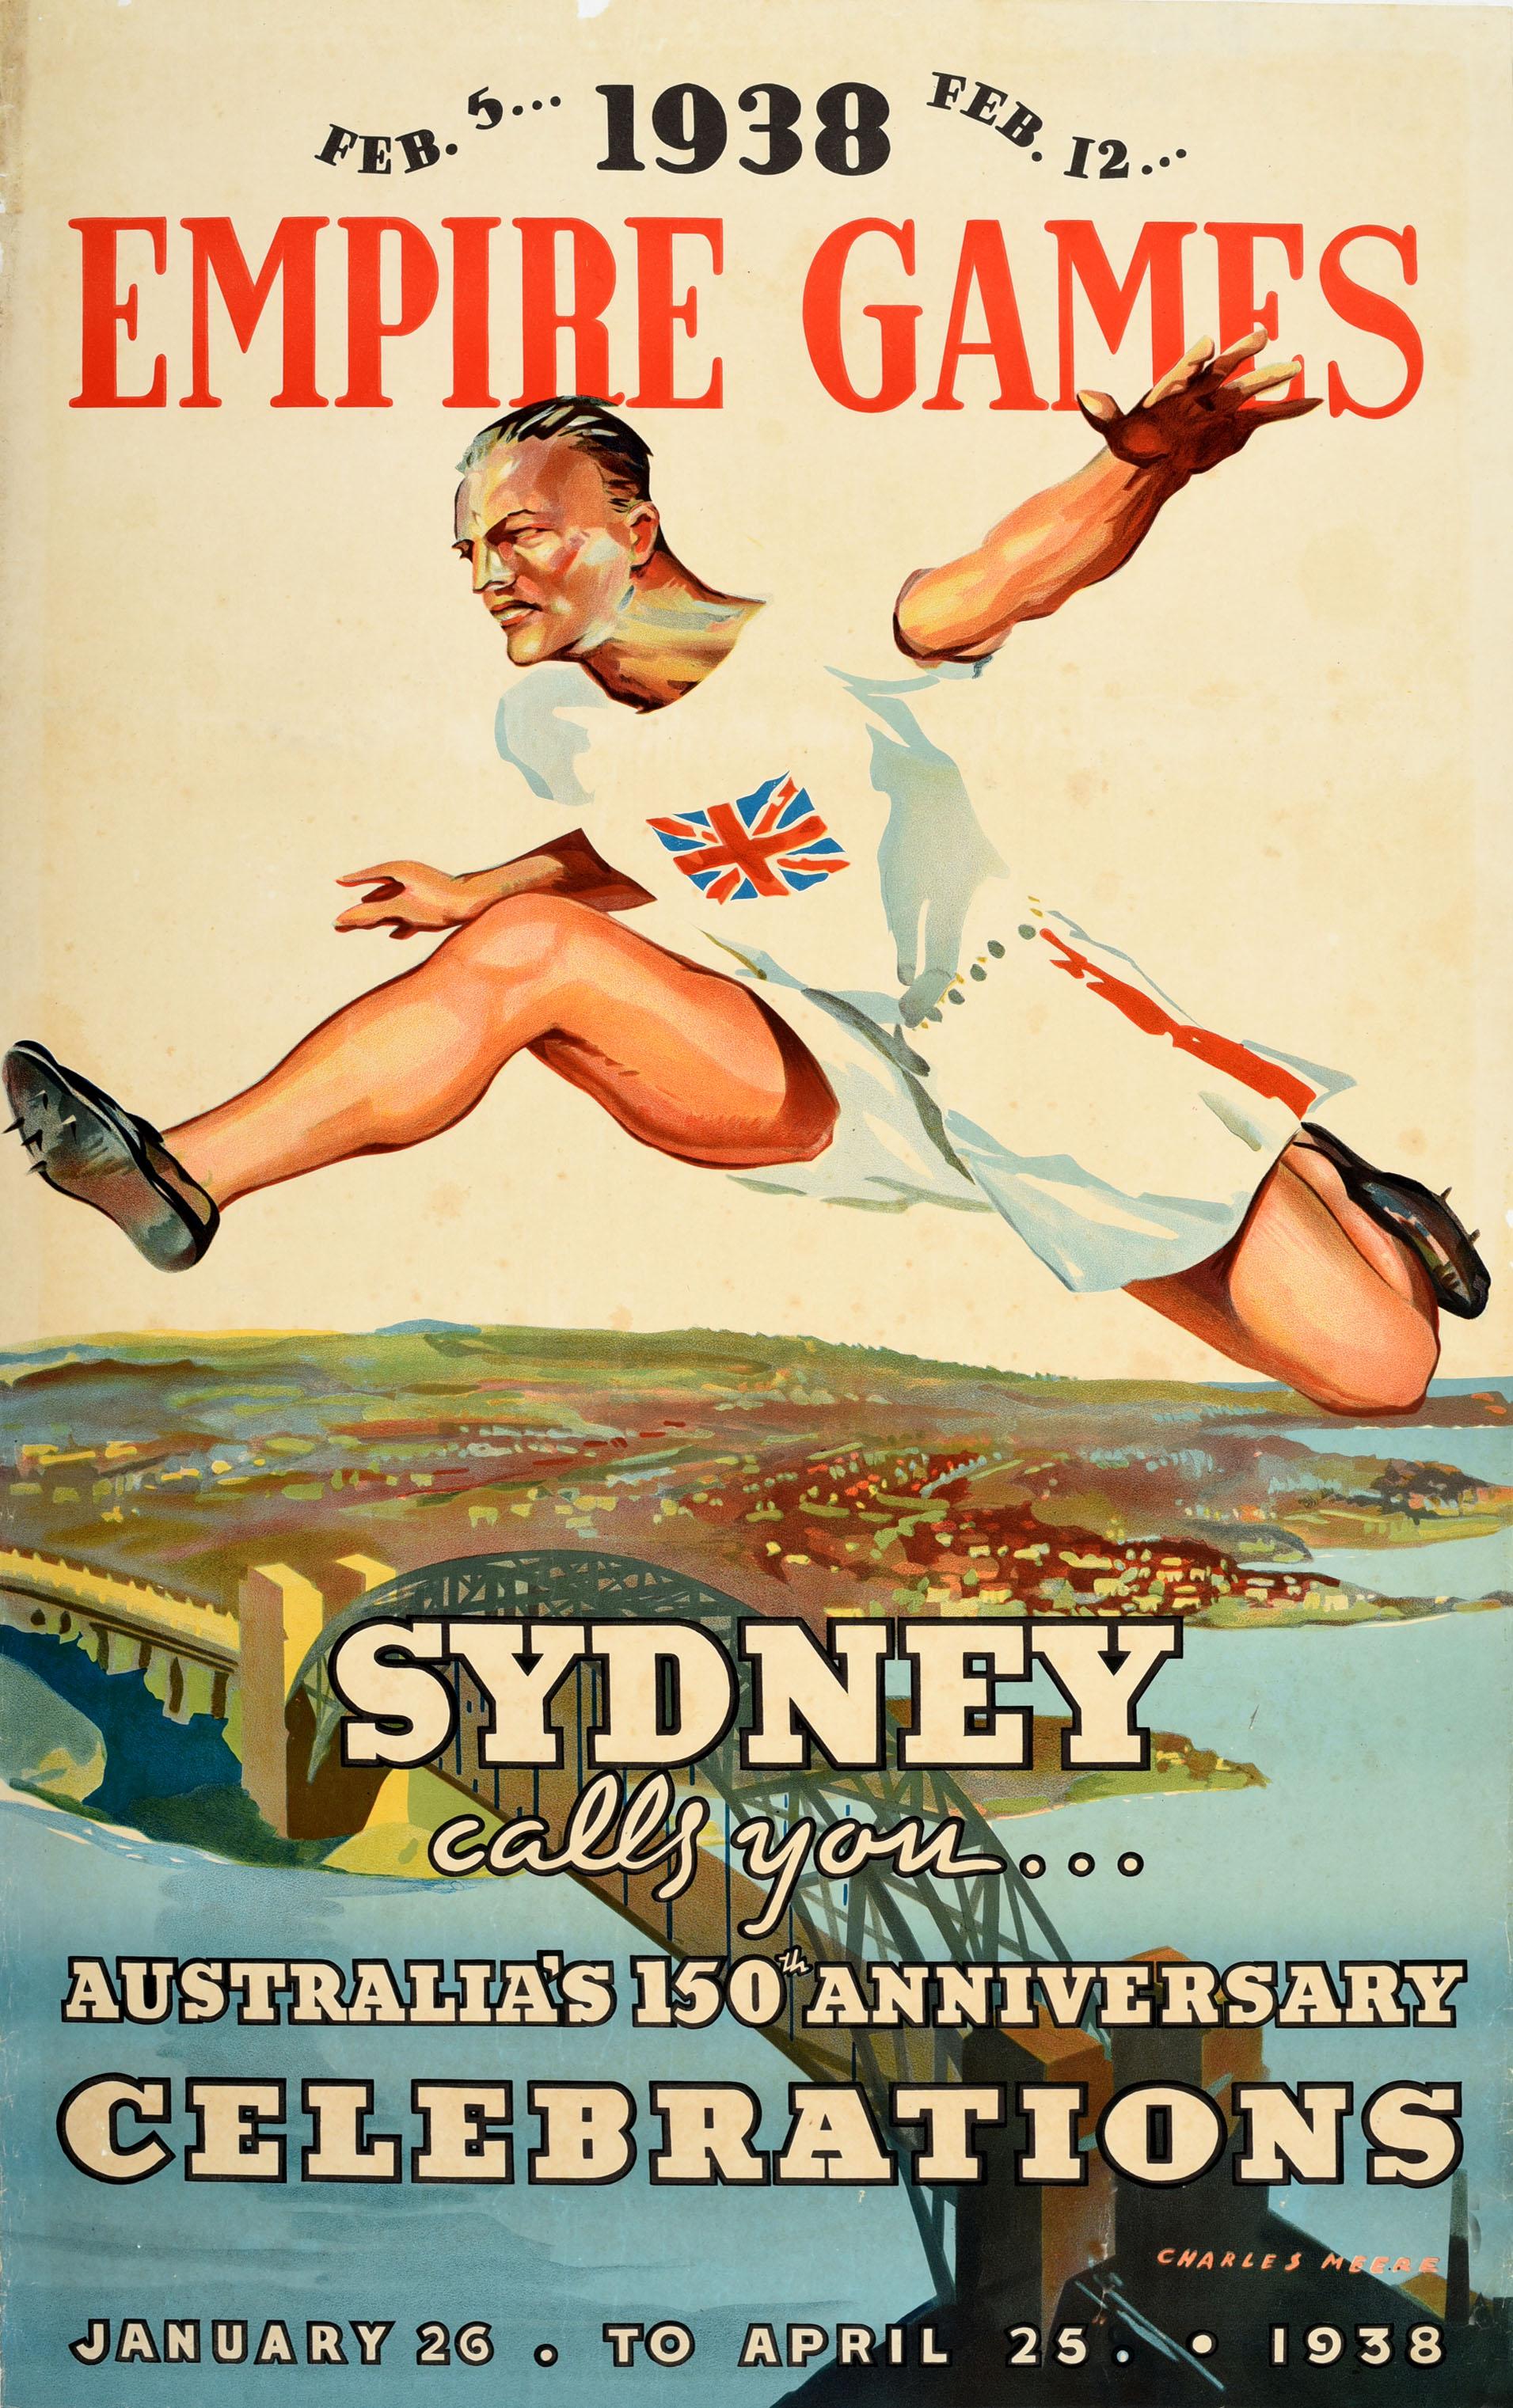 Charles Meere Print - Original Vintage Sport Poster 1938 Empire Games Sydney Australia 150 Anniversary